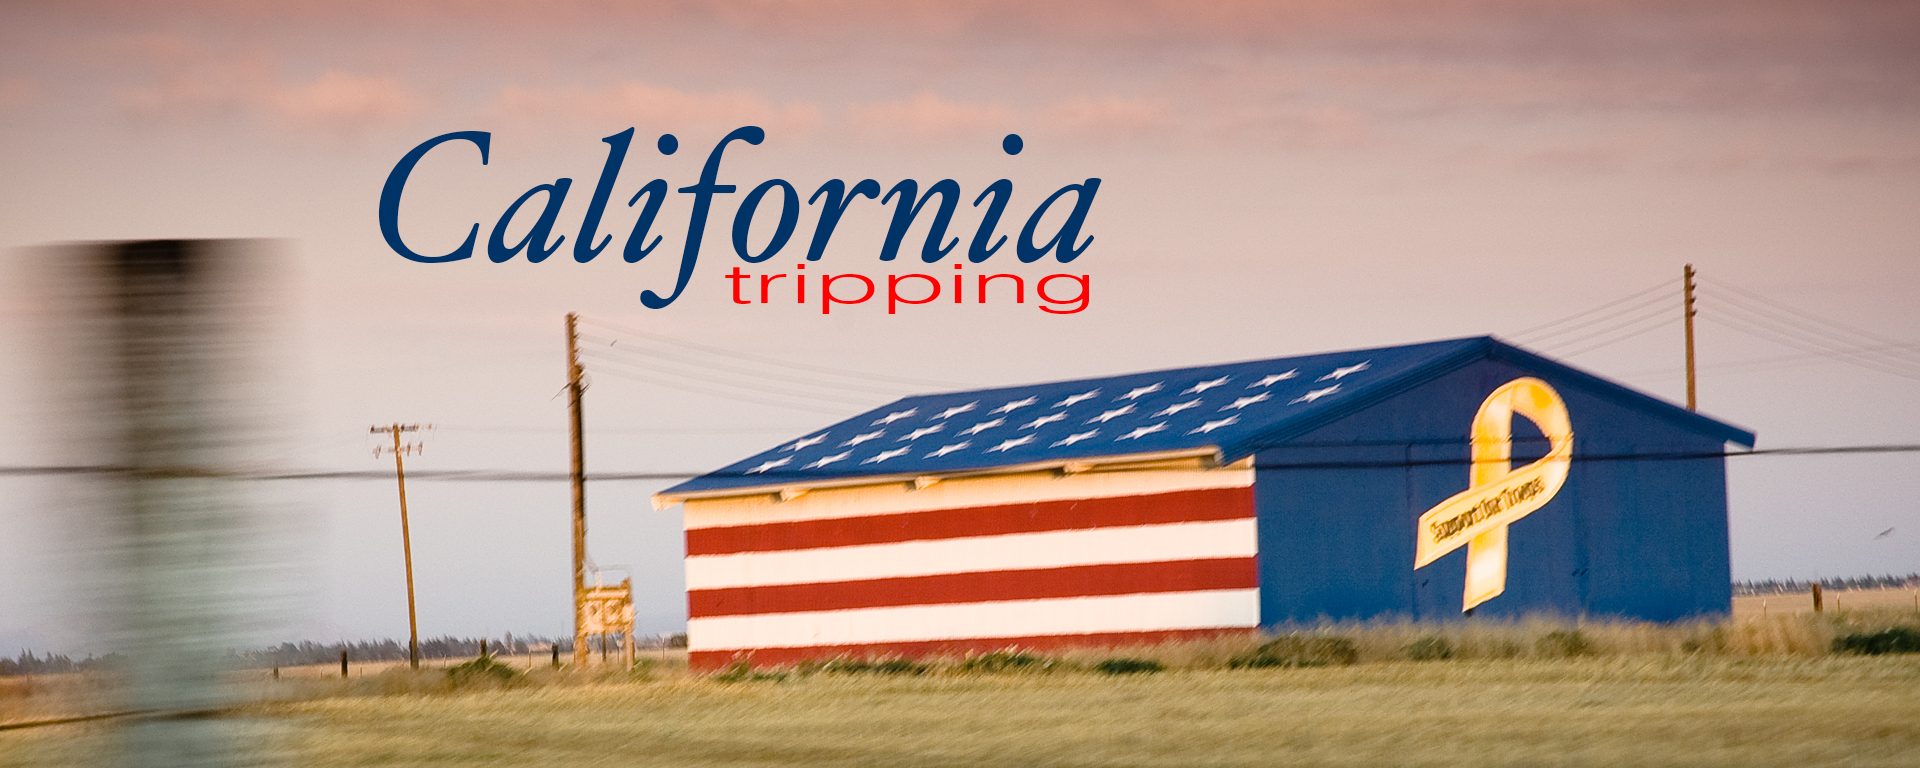 California tripping